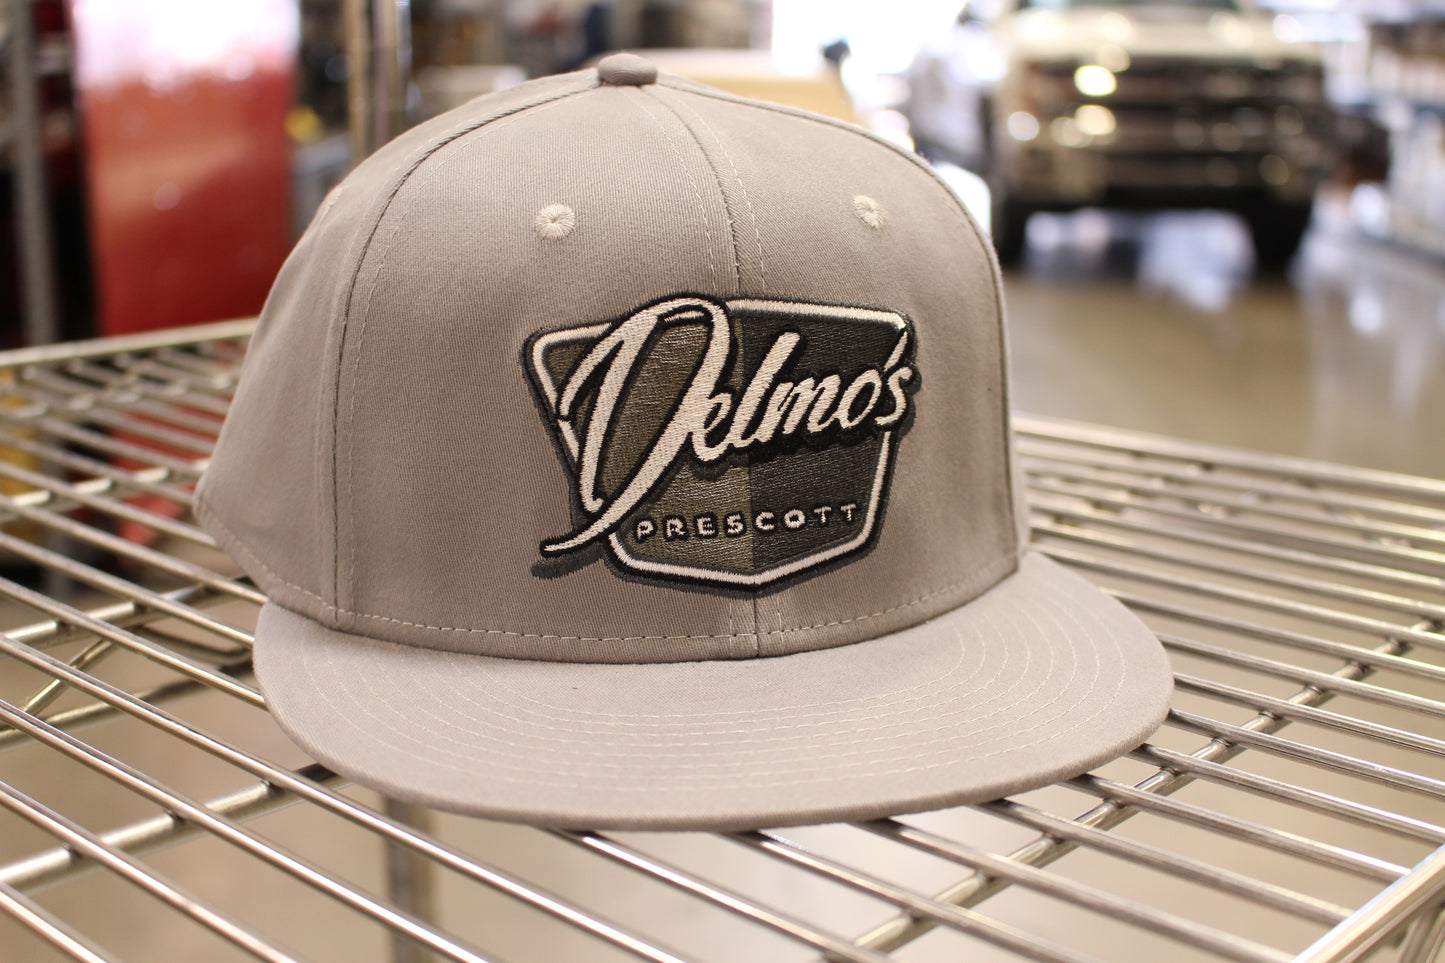 Delmo's Prescott Logo Flat Bill Fitted Light Gray